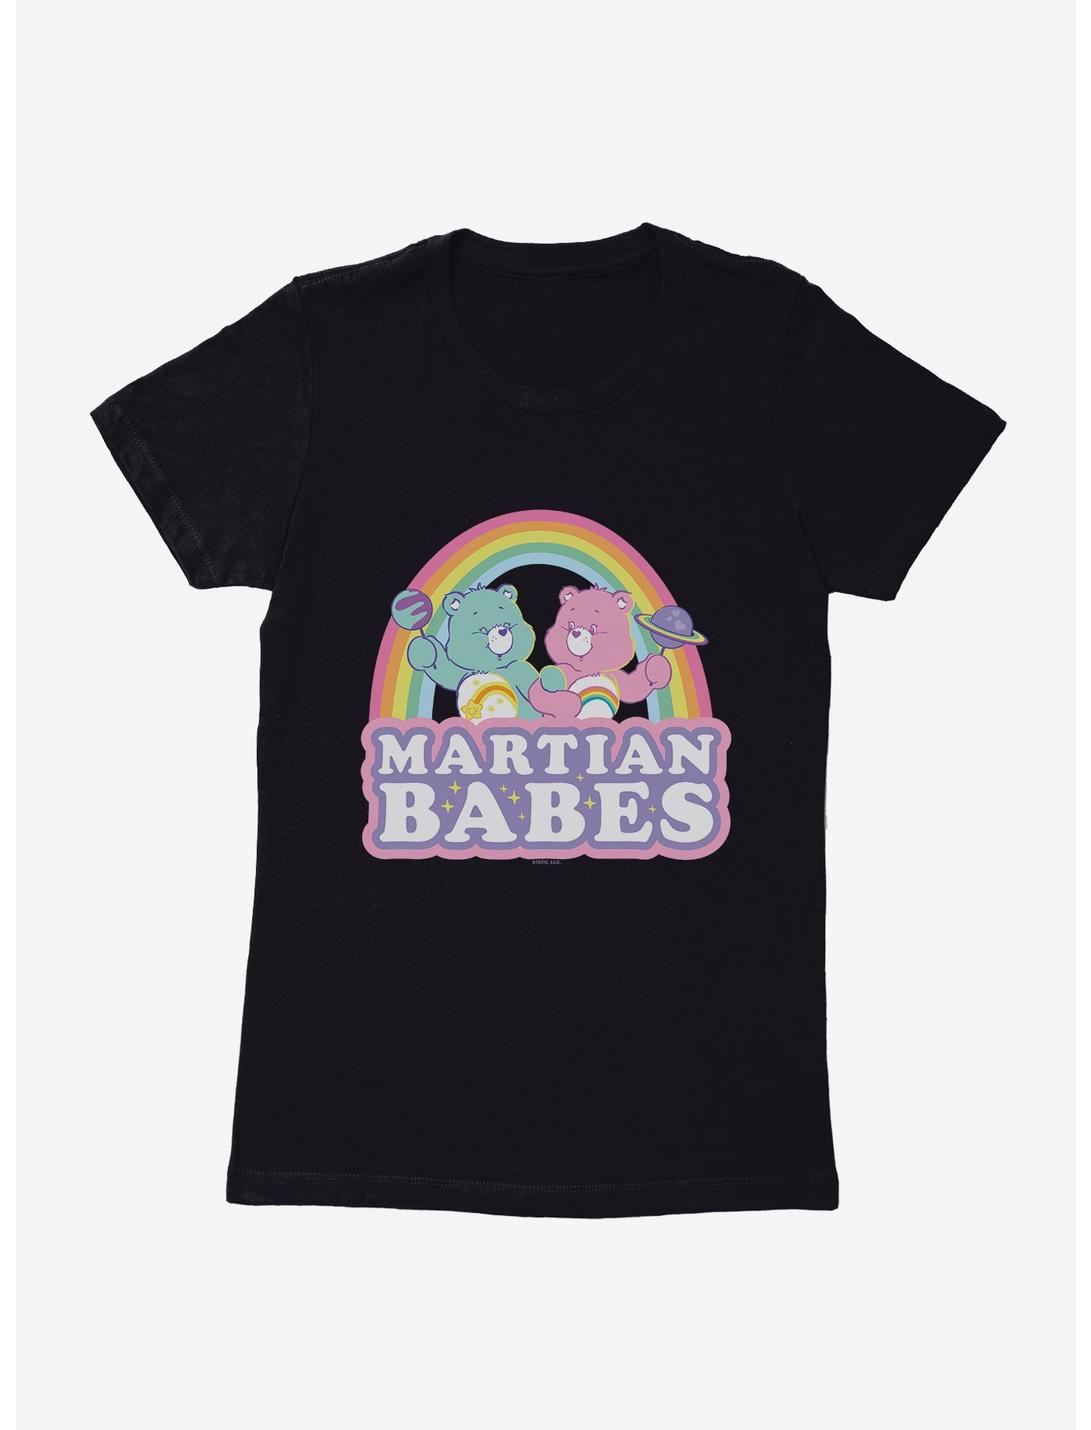 Care Bears Martian Babes Womens T-Shirt, BLACK, hi-res